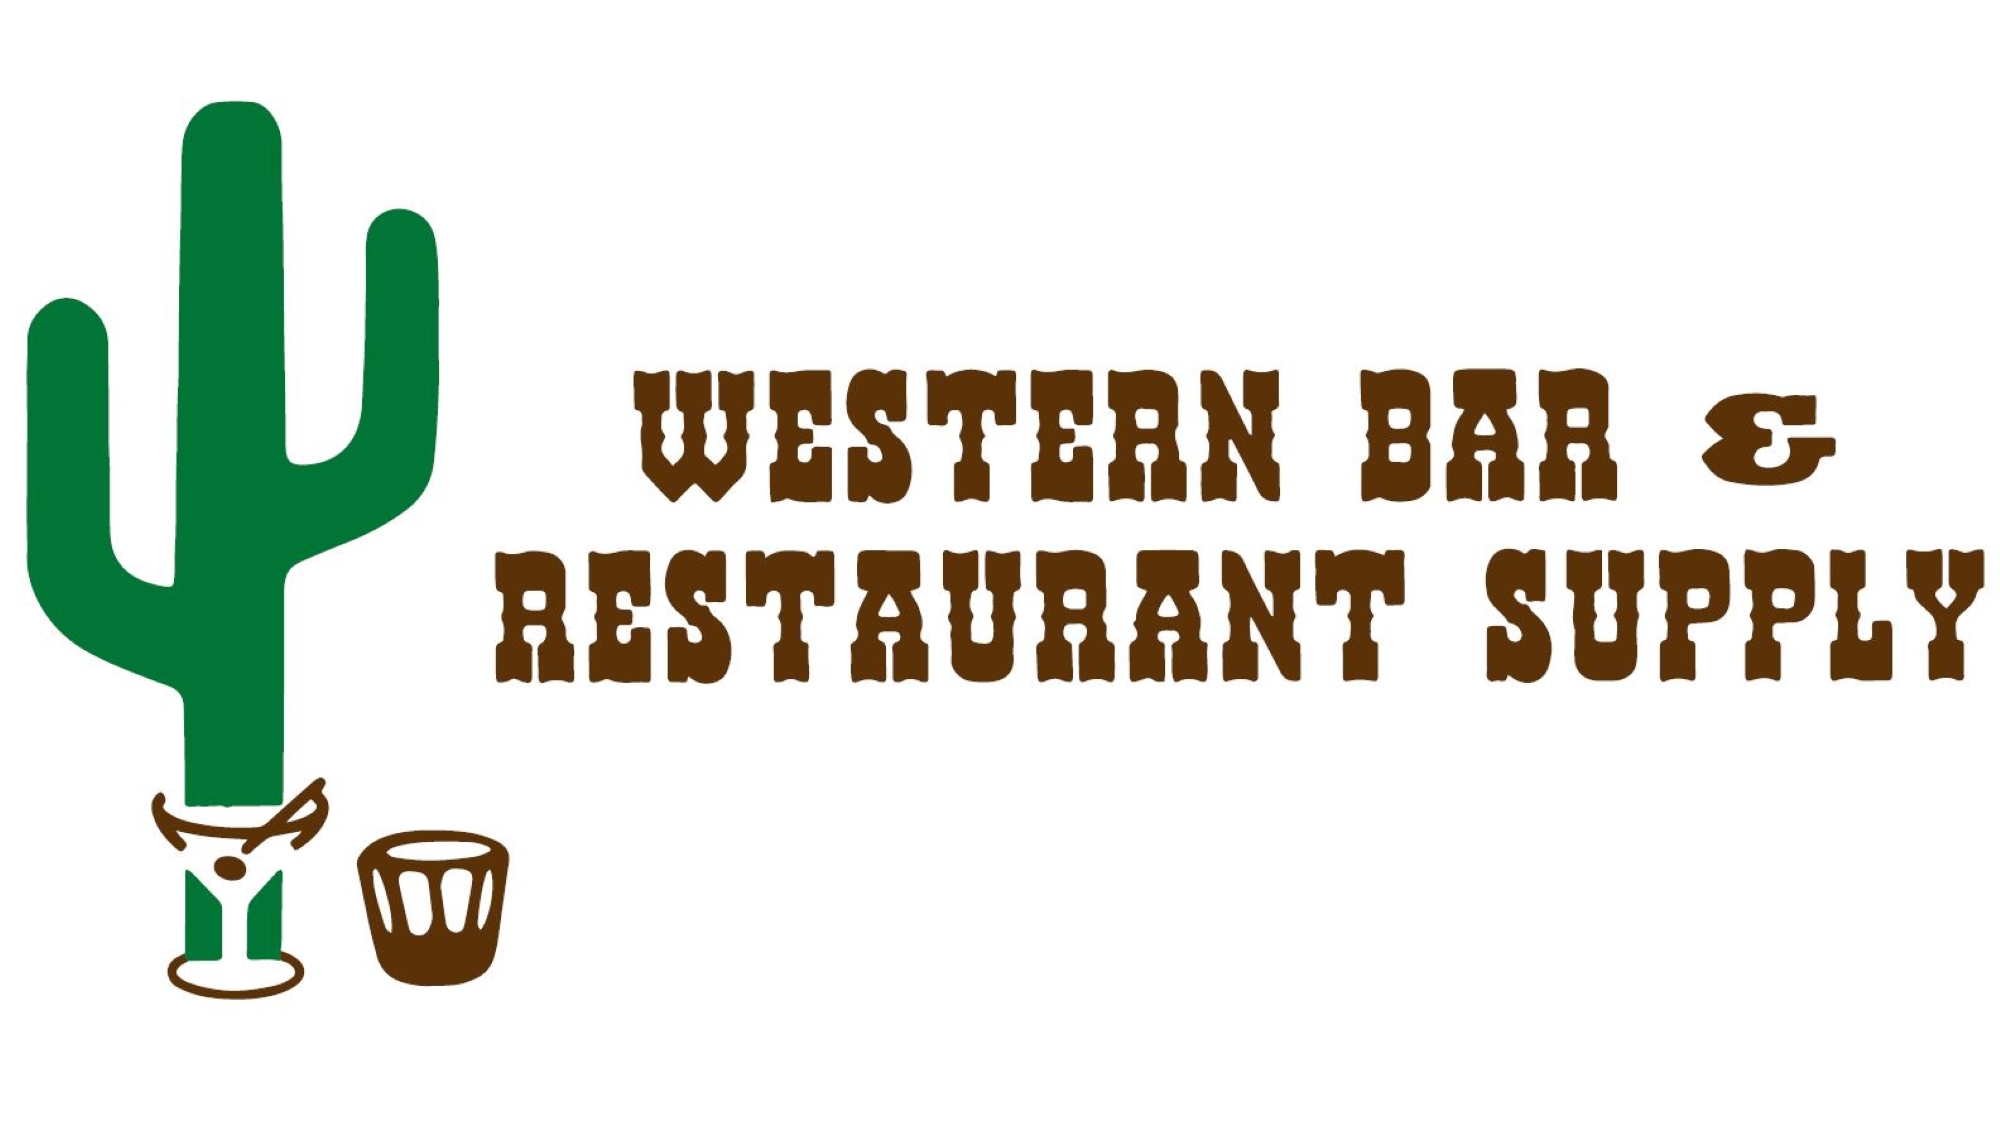 Western Bar & Rest. Supply Co.